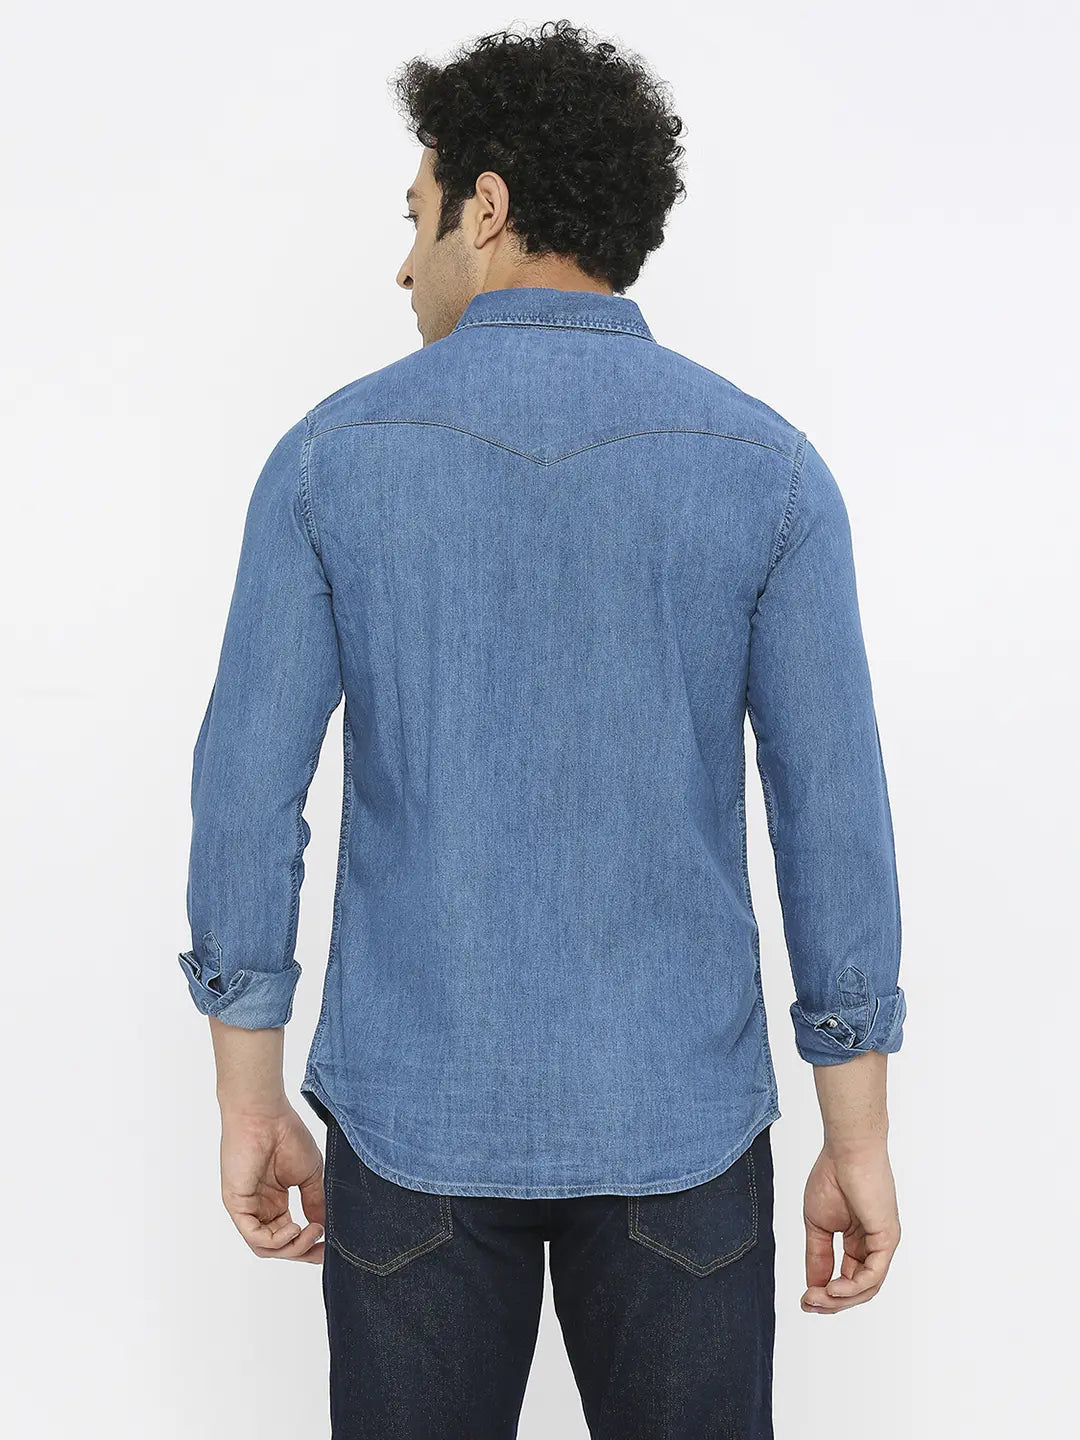 Buy Online|Spykar Men Indigo Blue Cotton Slim Fit Half Sleeve Denim Shirt